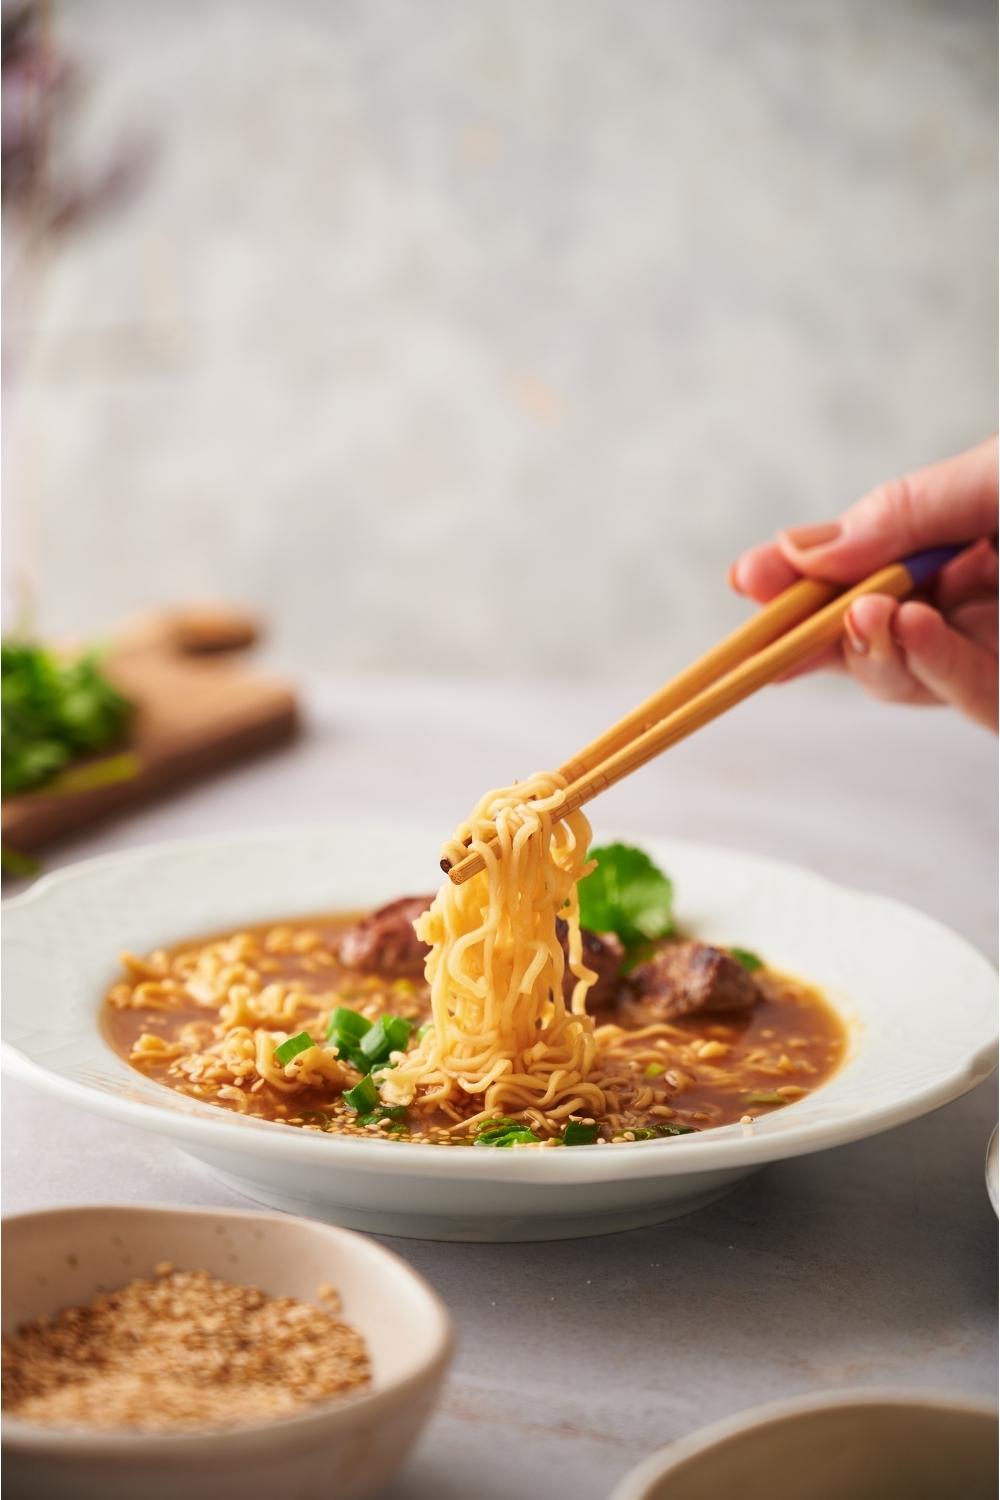 Hand using chopsticks to grab ramen noodles from a bowl